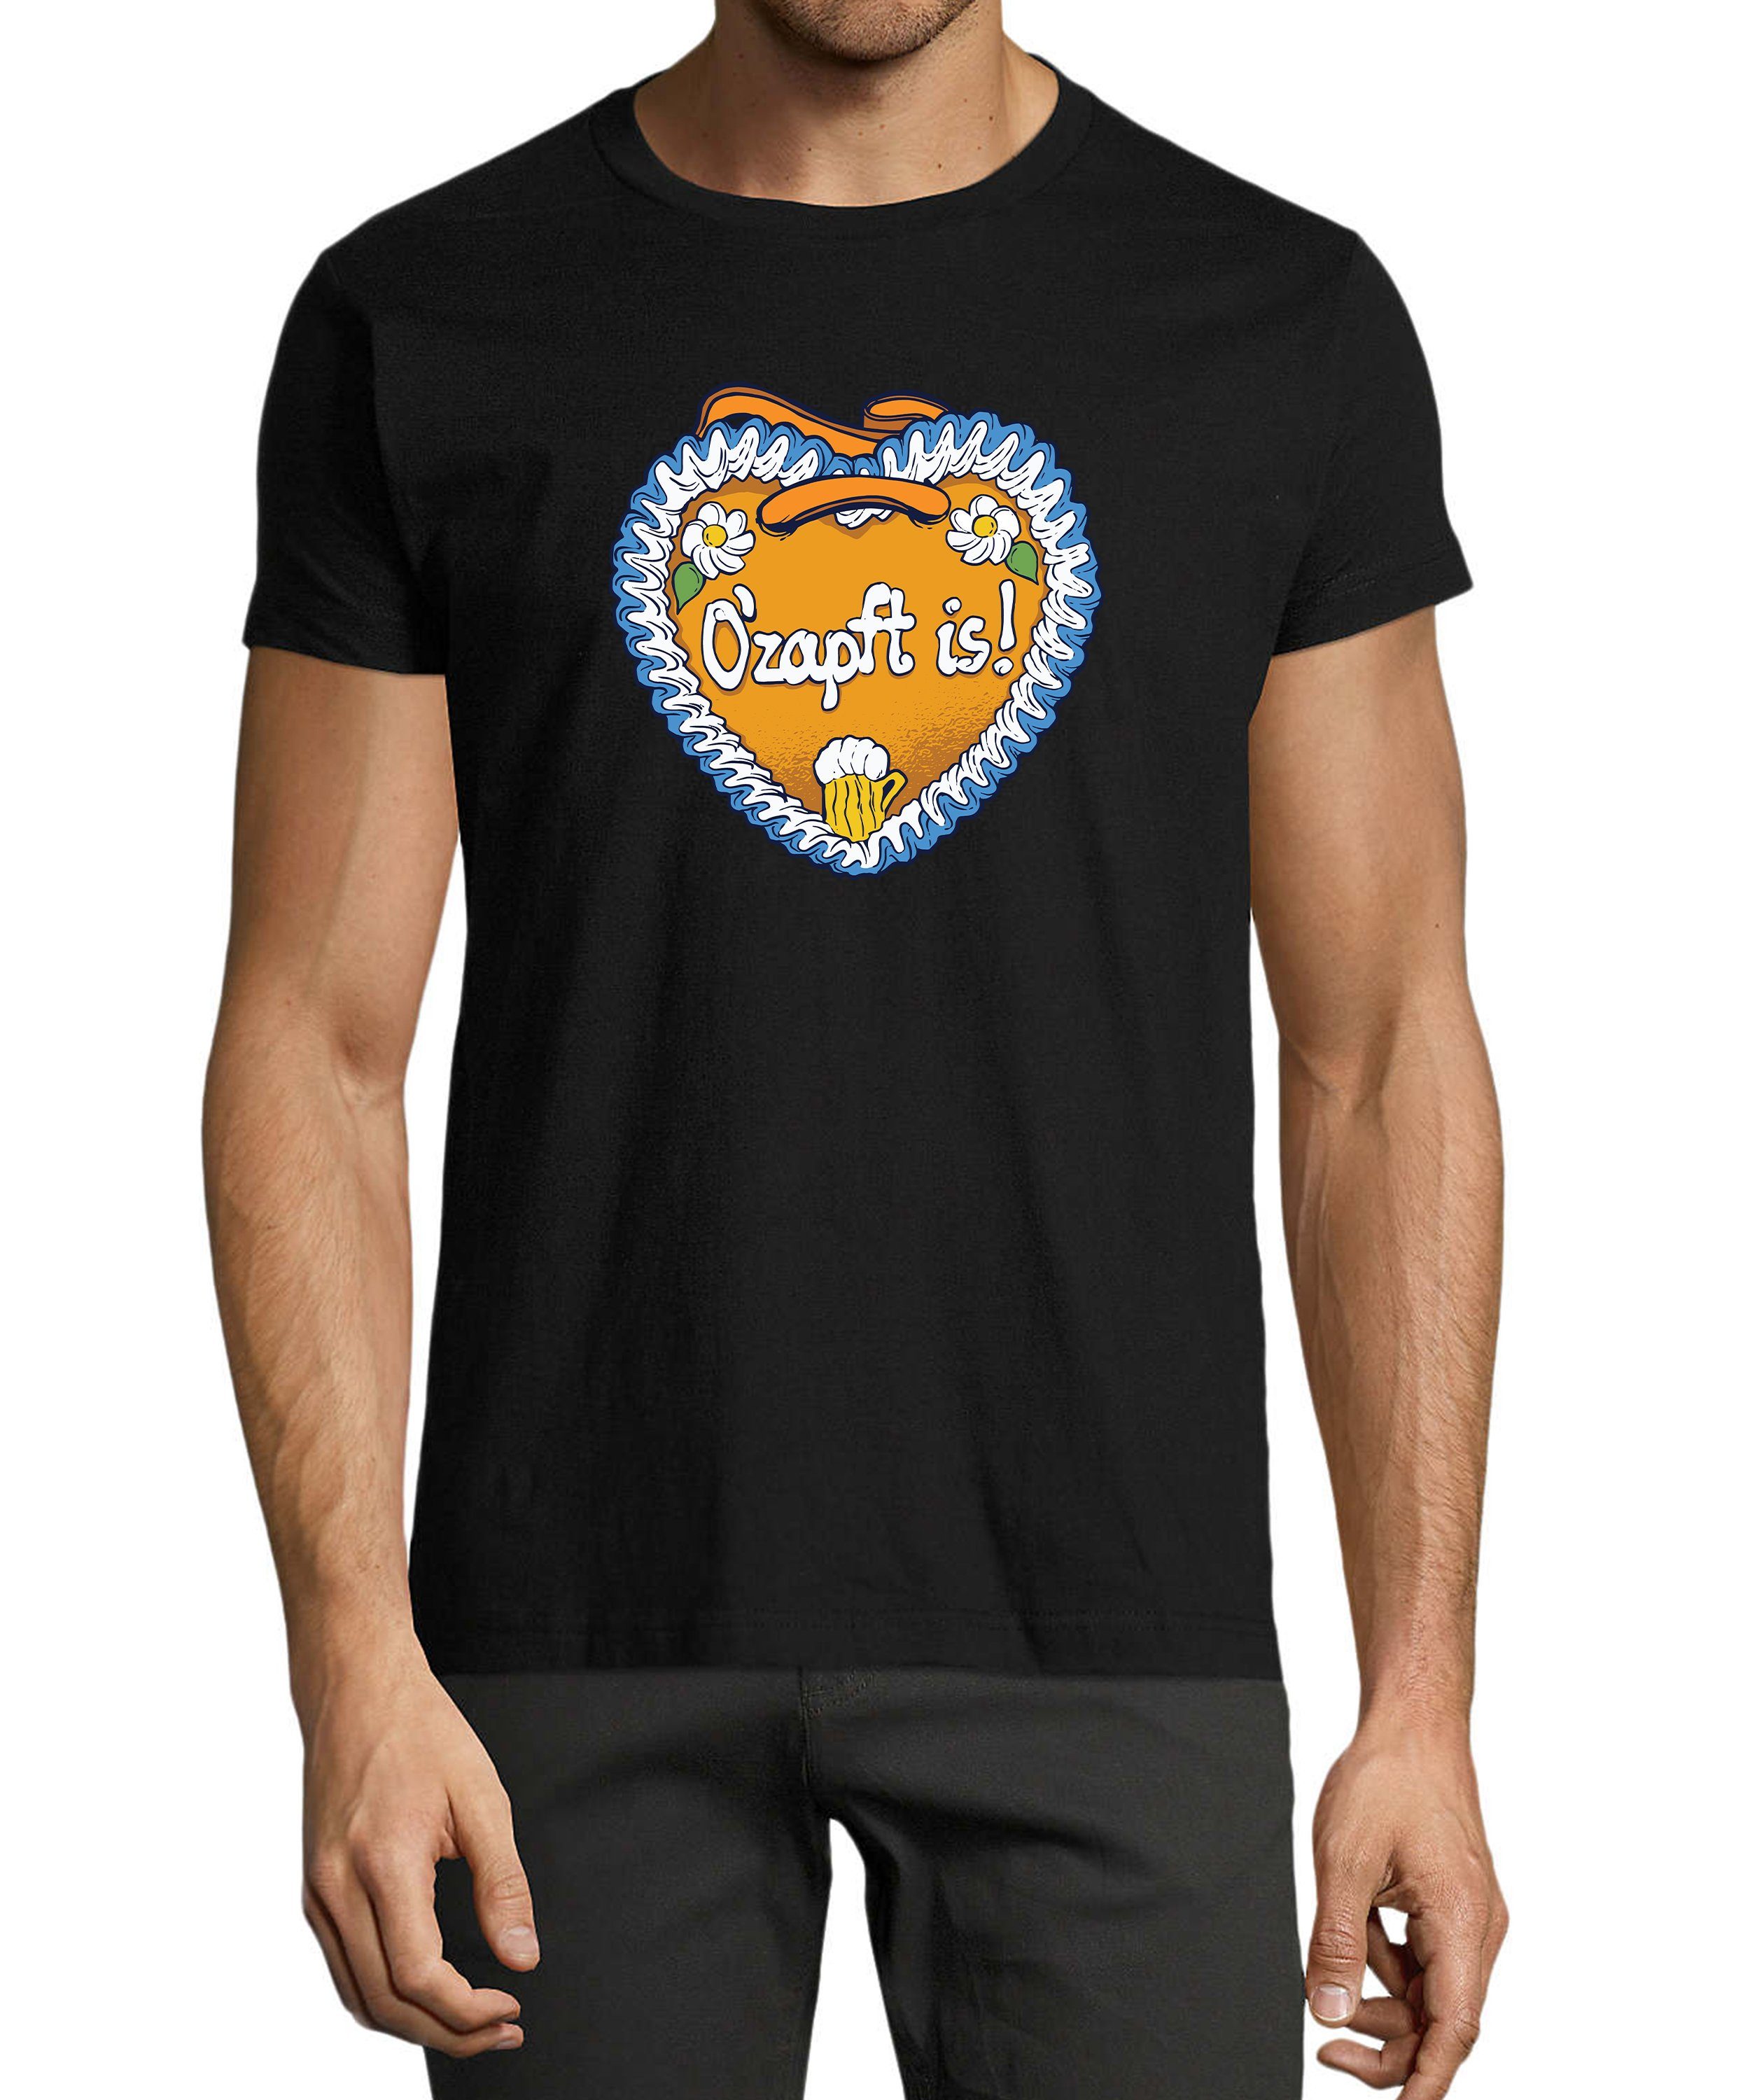 MyDesign24 T-Shirt Herren Fit, Print Trinkshirt O'Zapft mit Regular Fun is - Aufdruck Shirt i313 schwarz Baumwollshirt